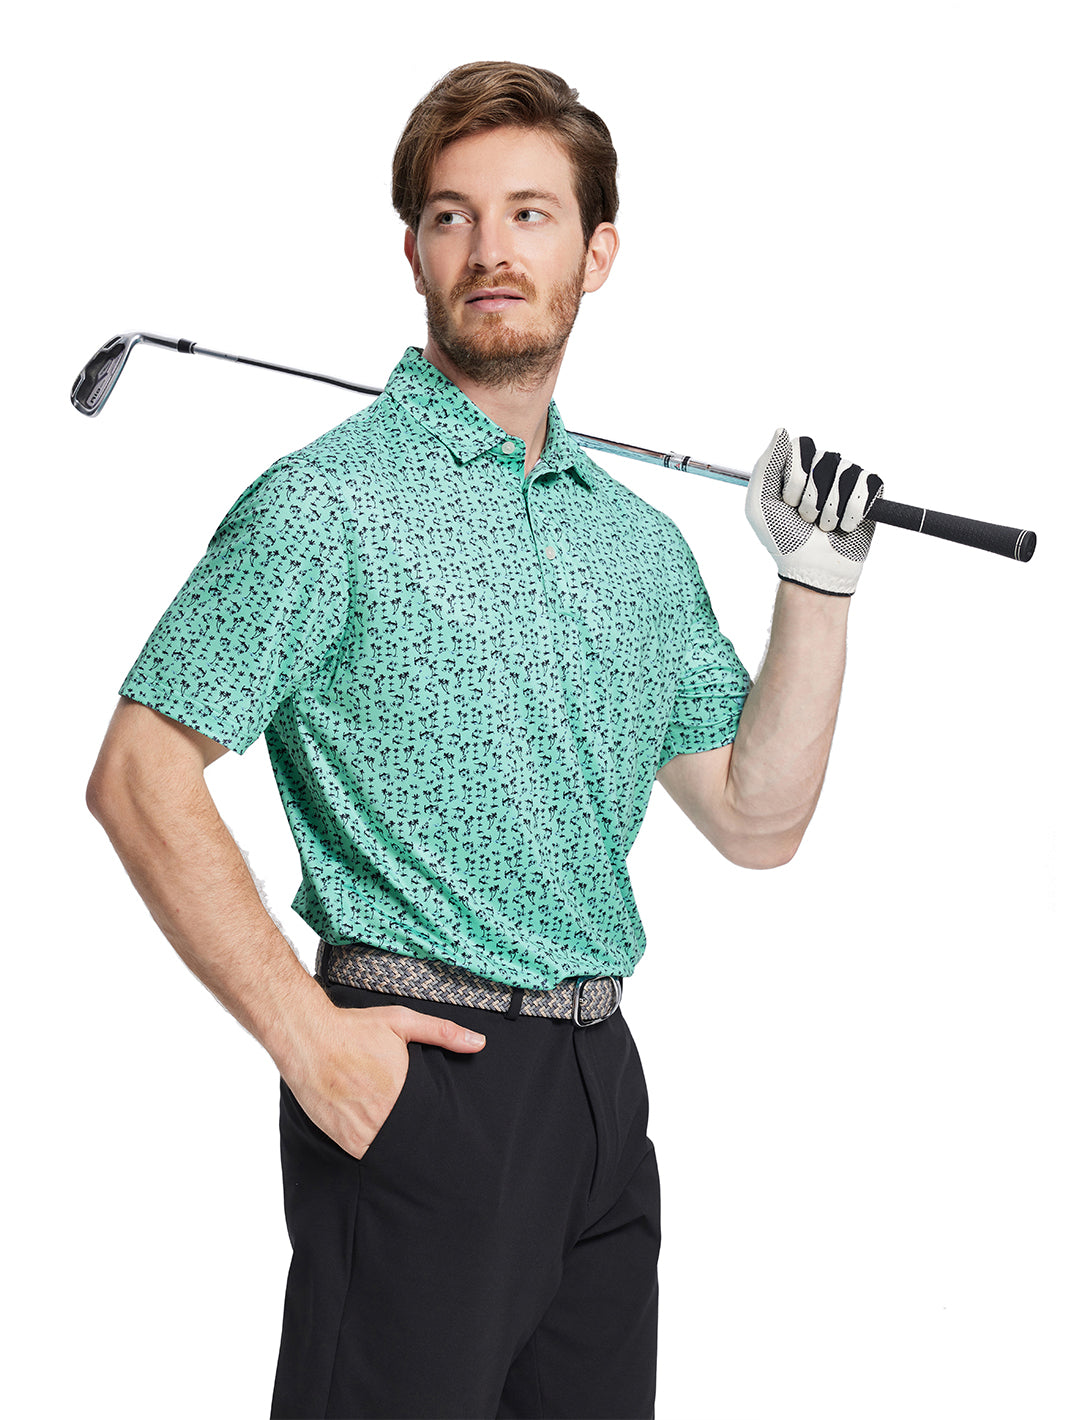 Men's Printed Golf Shirts-Mint Seaside Palm